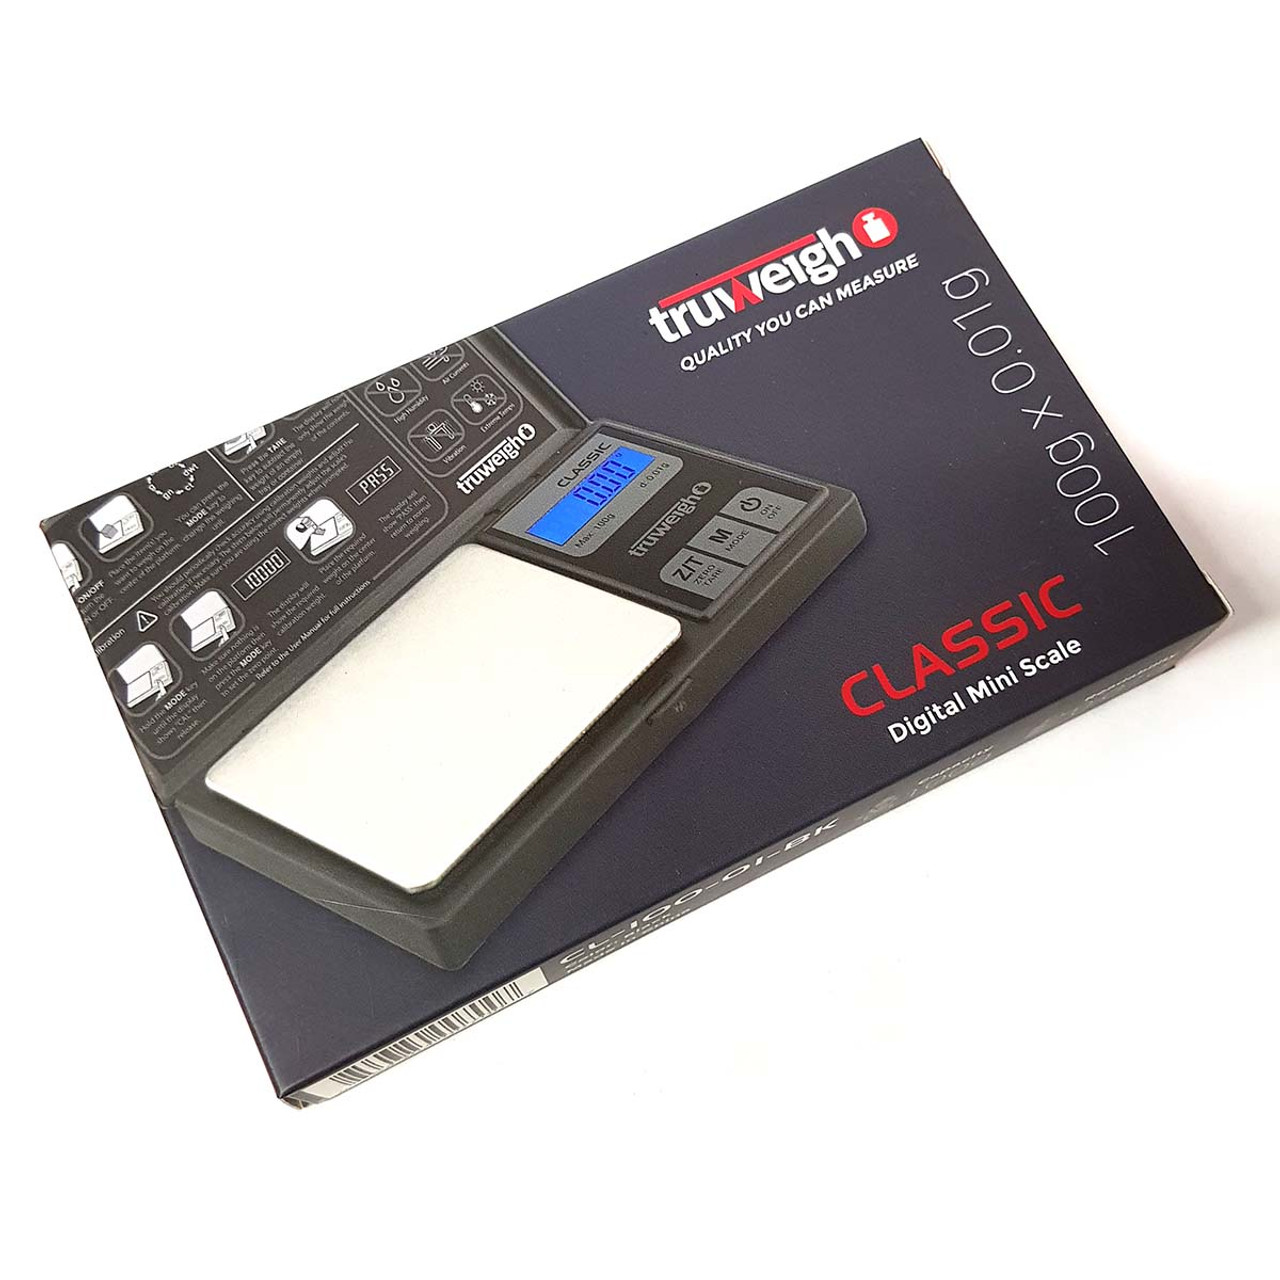 Mini Classic Digital Mini Scale 100g x 0.01g Black